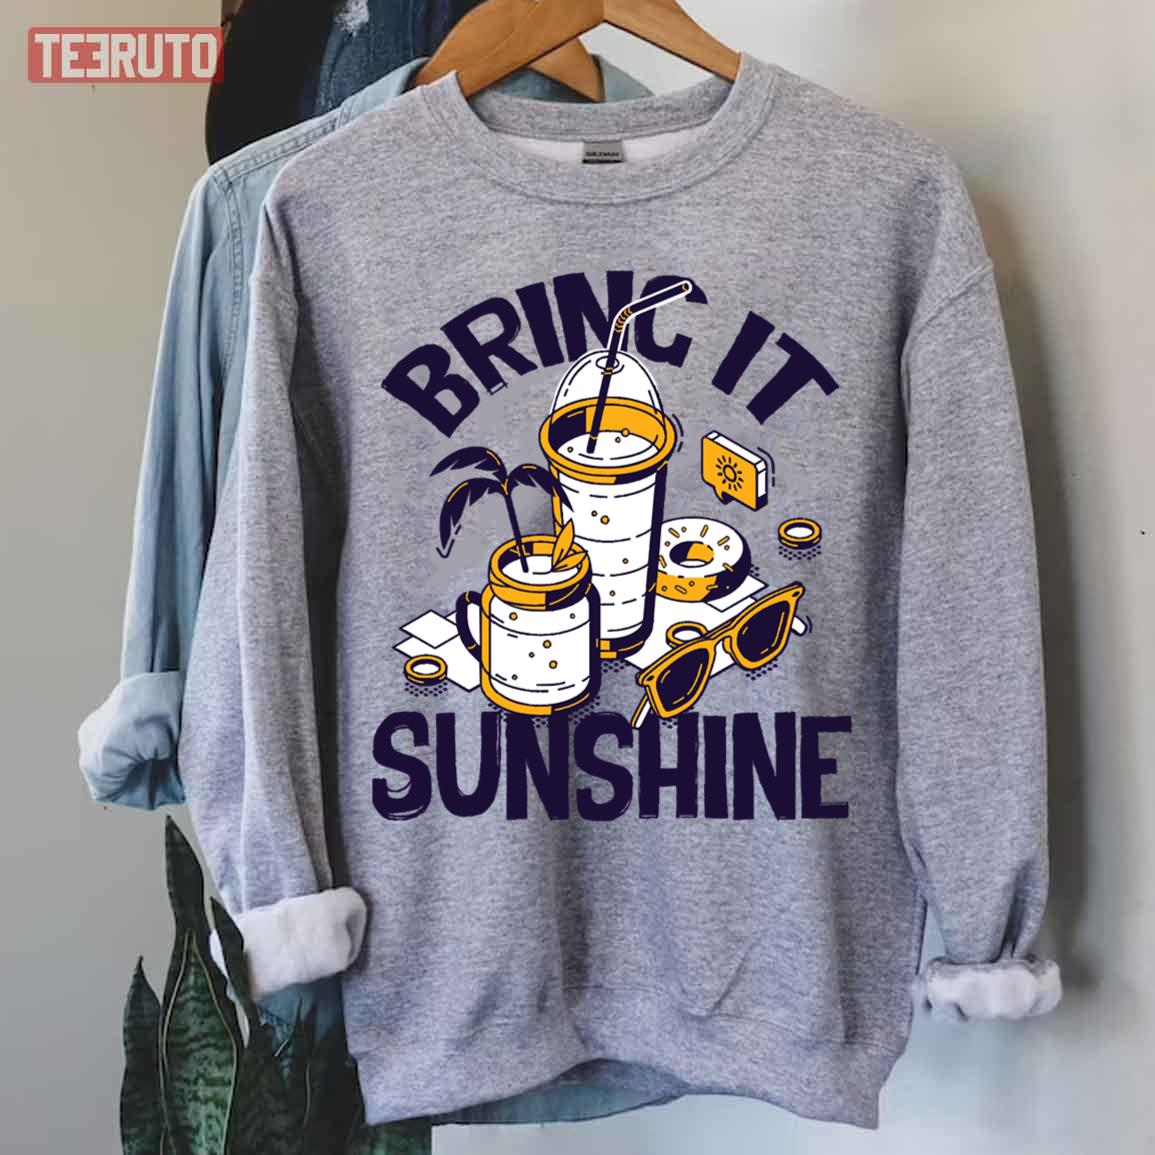 Bring It Sunshine Summer Cute Graphic Unisex T-Shirt